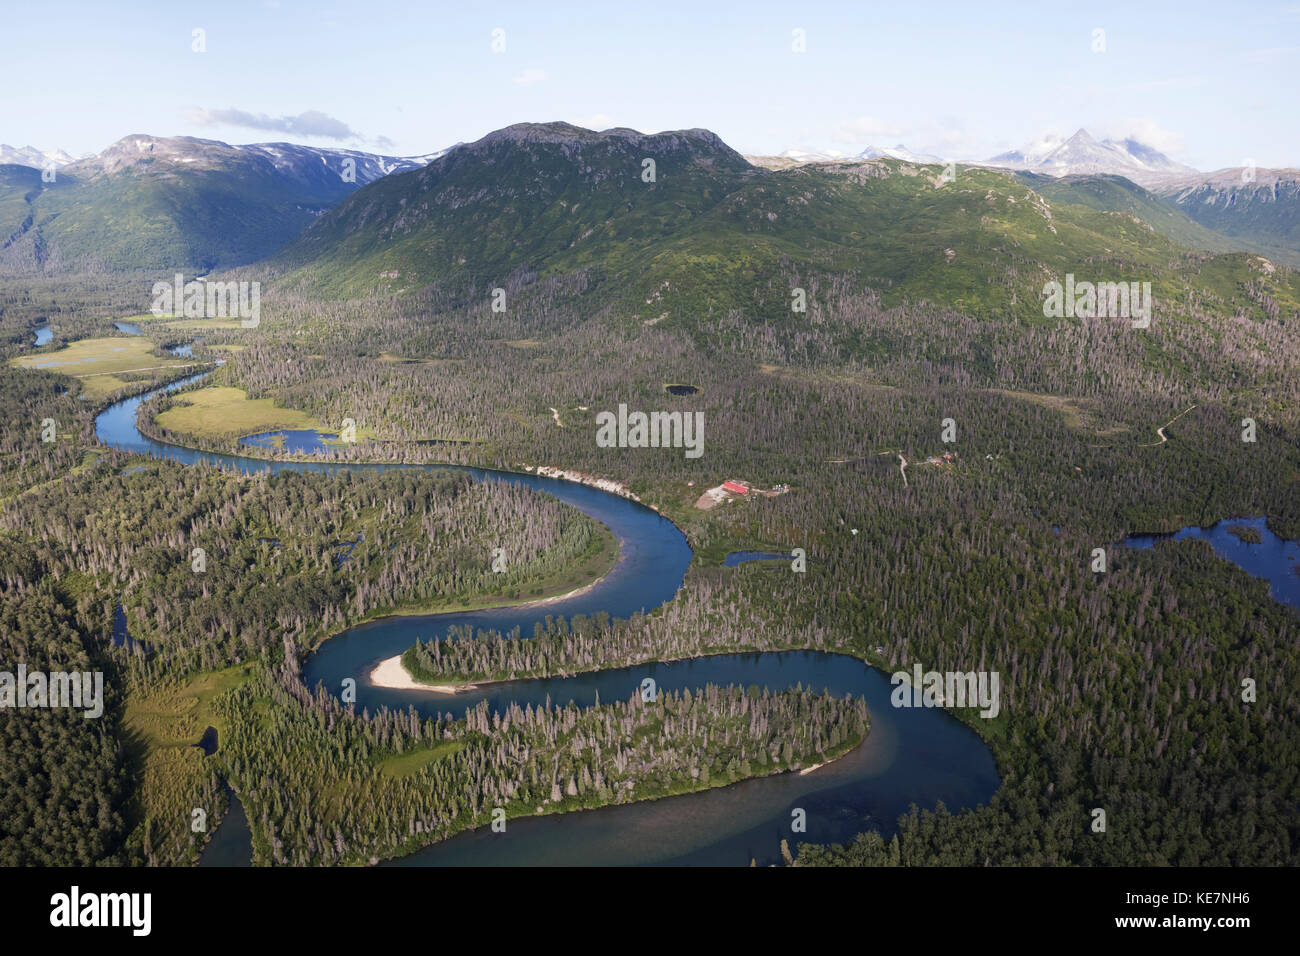 Iliamna River In Lake And Peninsula Borough; Alaska, United States Of America Stock Photo